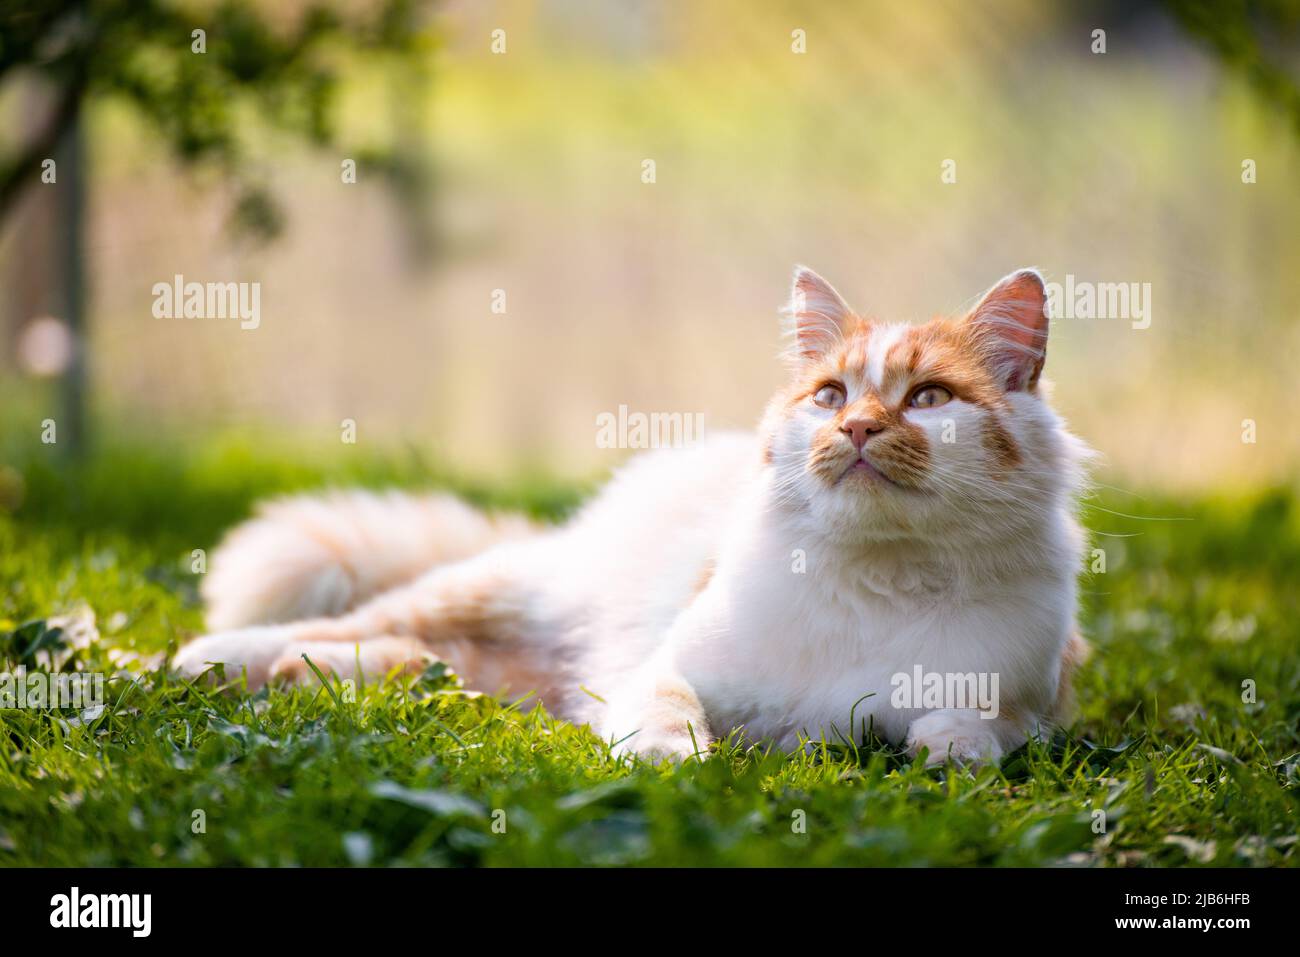 Laying on backyard grass red domestic cat Stock Photo